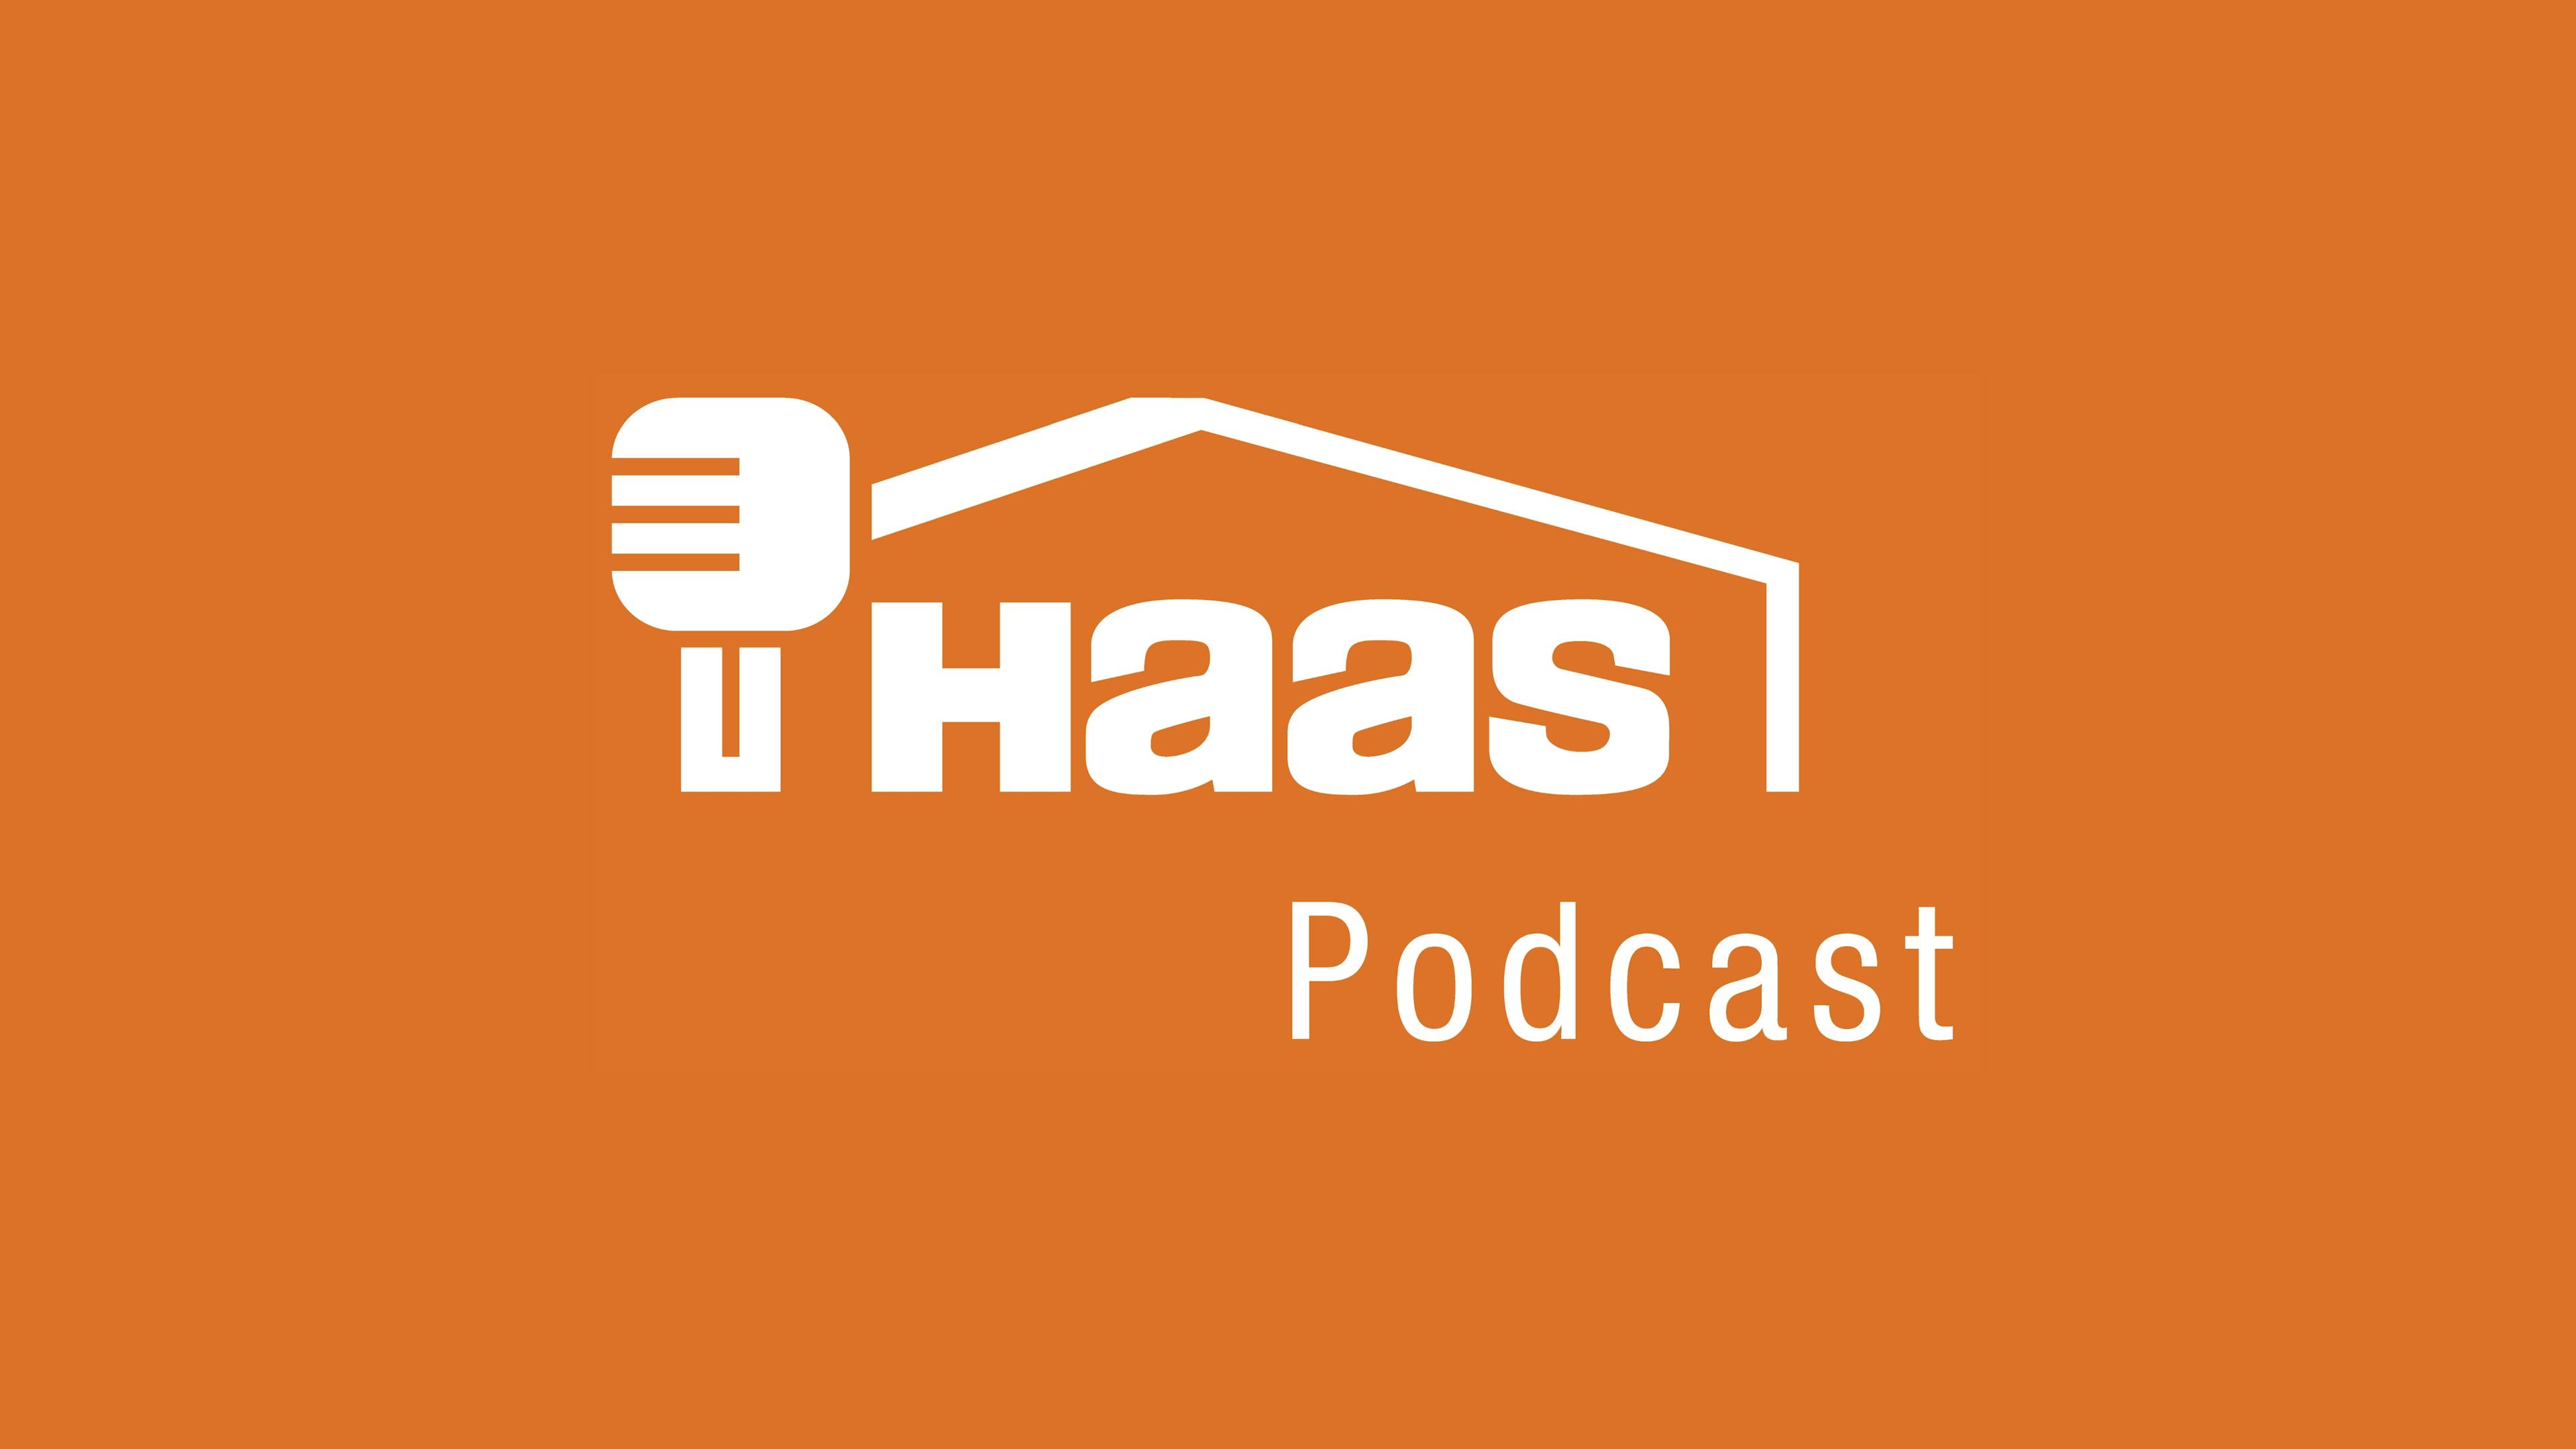 Haas Fertigbau Podcast aus einem Holz geschnitzt Folge 1